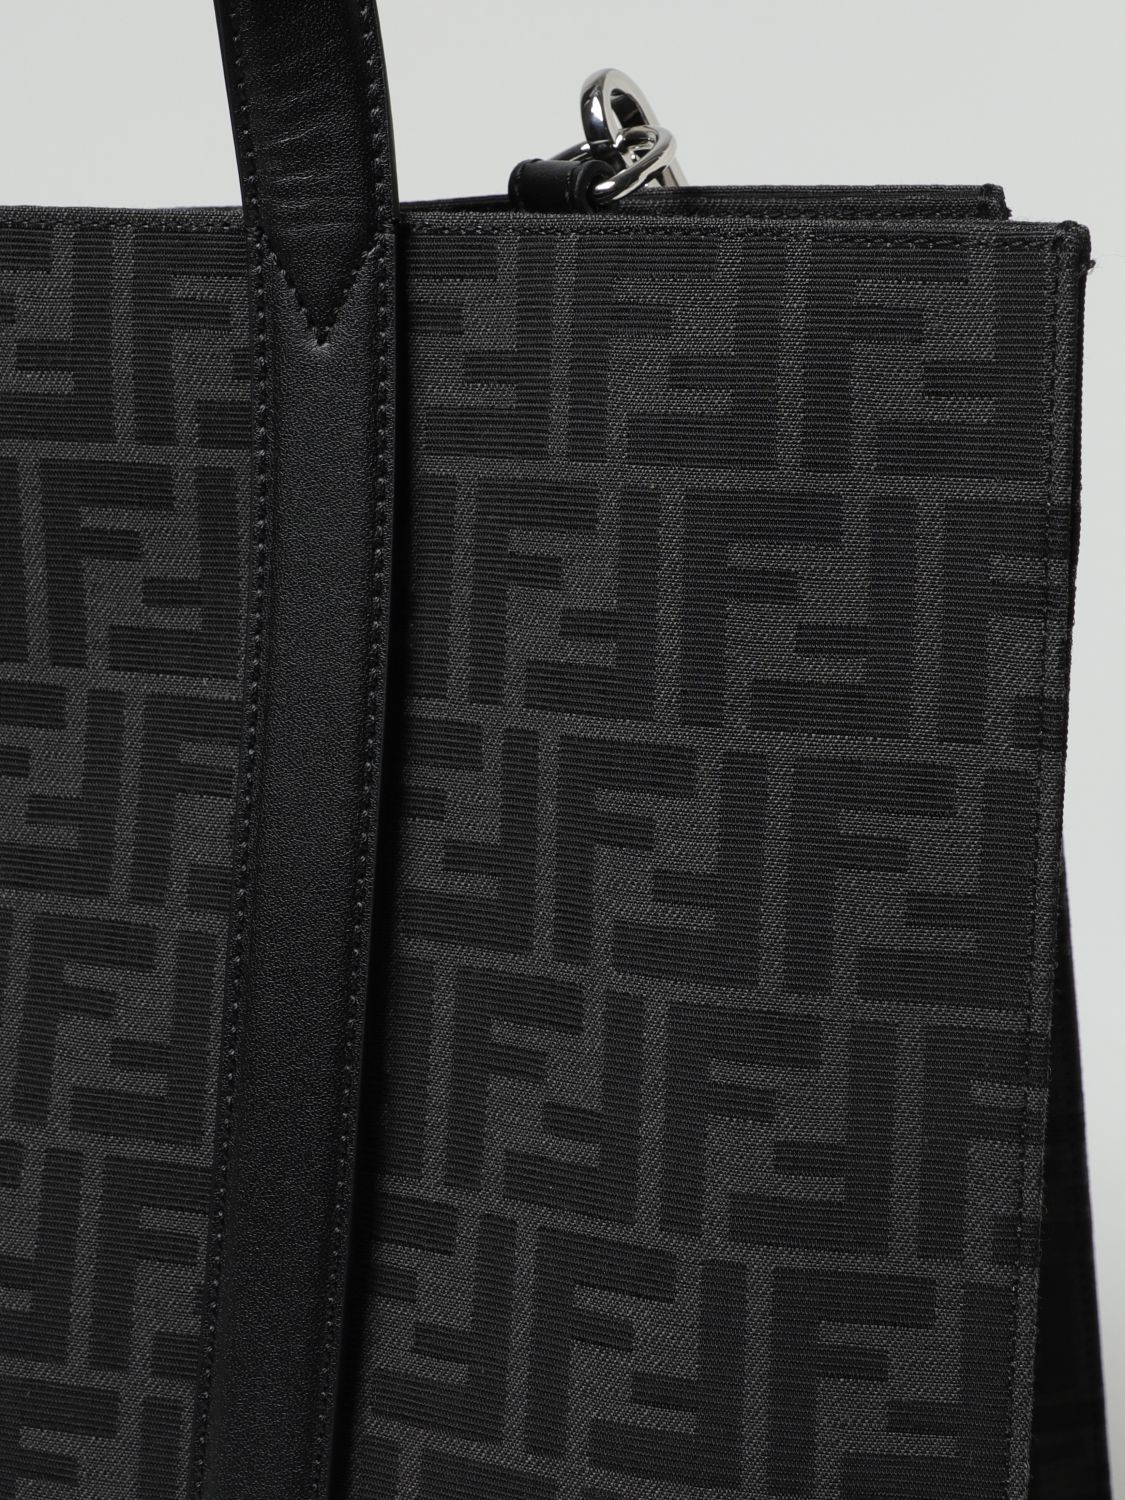 Fendi Jacquard Fabric Tote in Black for Men